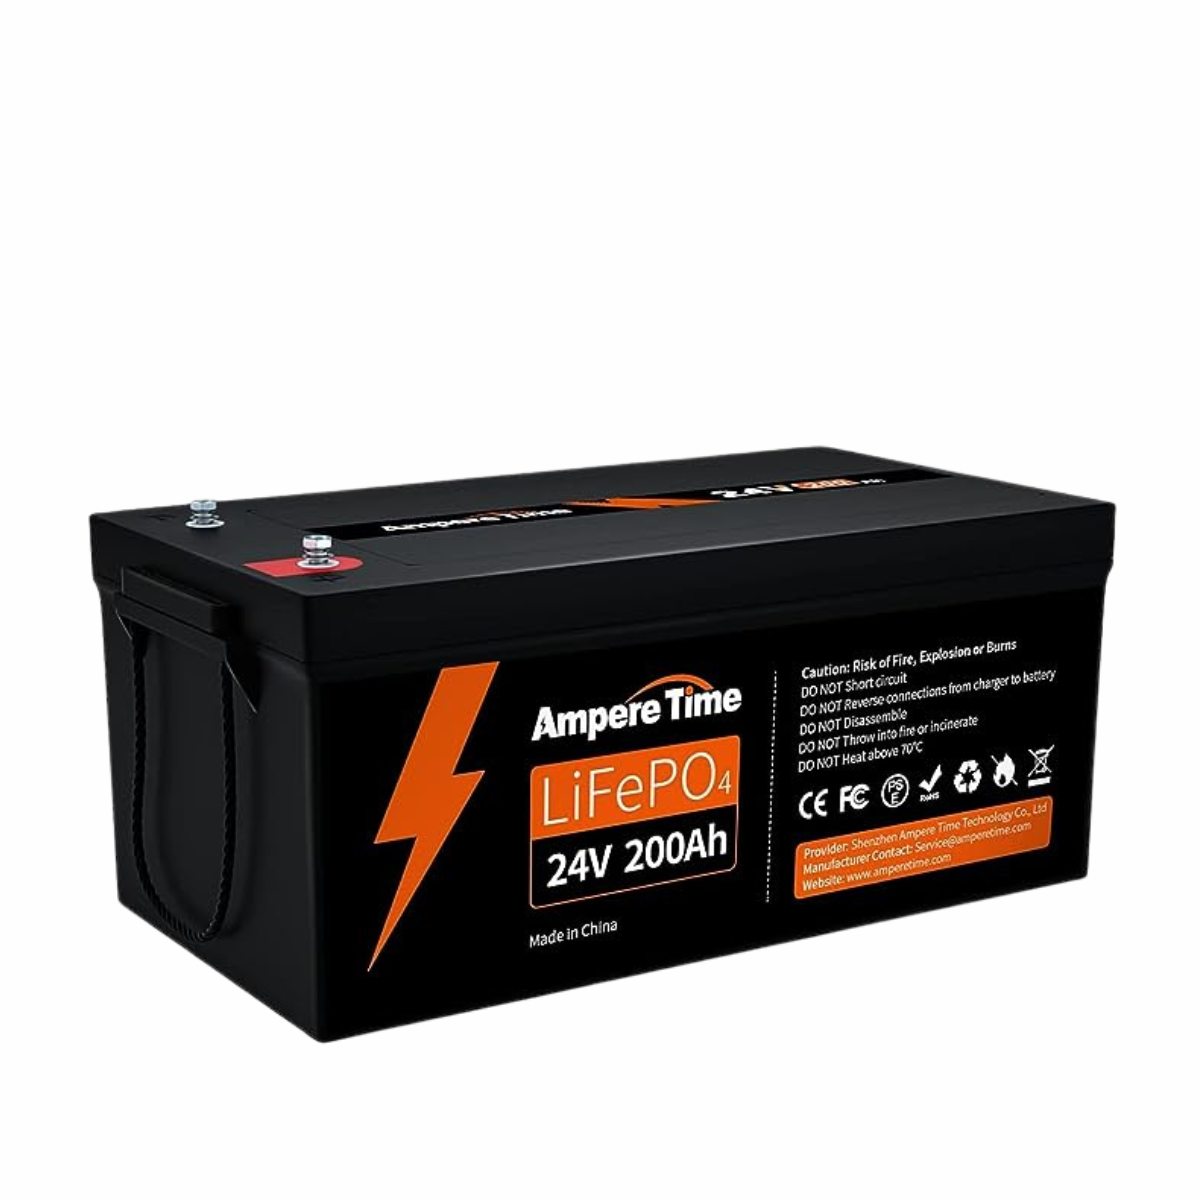 Ampere Time 24V 200Ah 5.12kWh Tiefzyklus LiFePO4 Batterie mit längerer Laufzeit, integriertem 200A BMS